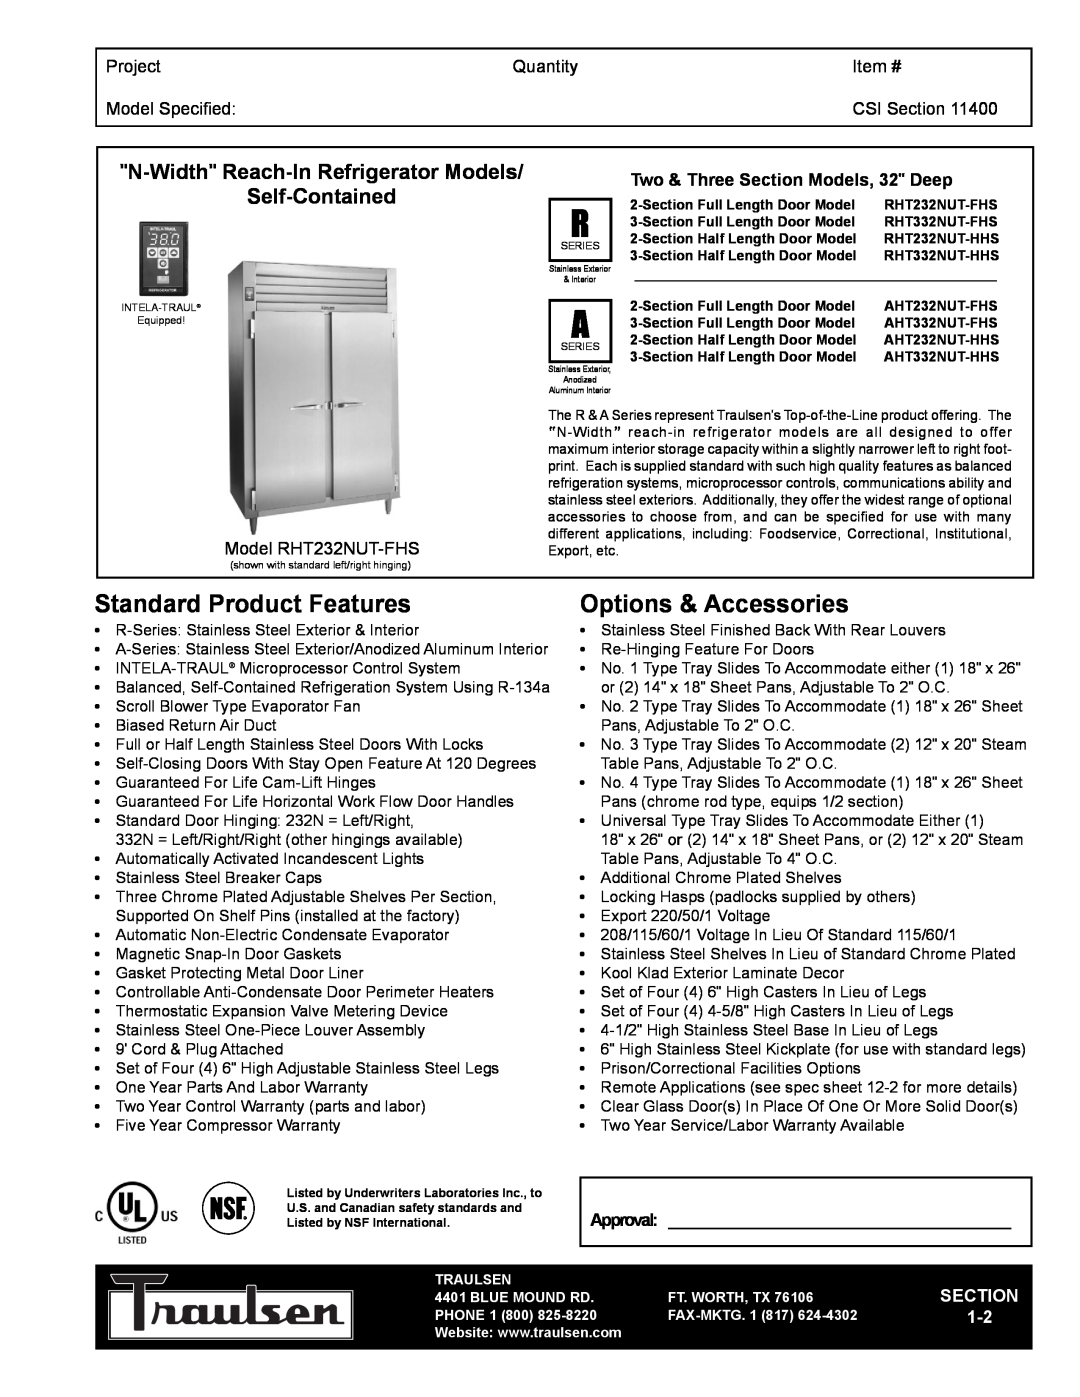 Traulsen RHT232NUT-FHS warranty N-Width Reach-InRefrigerator Models, Project, Quantity, Item #, Model Specified, Section 